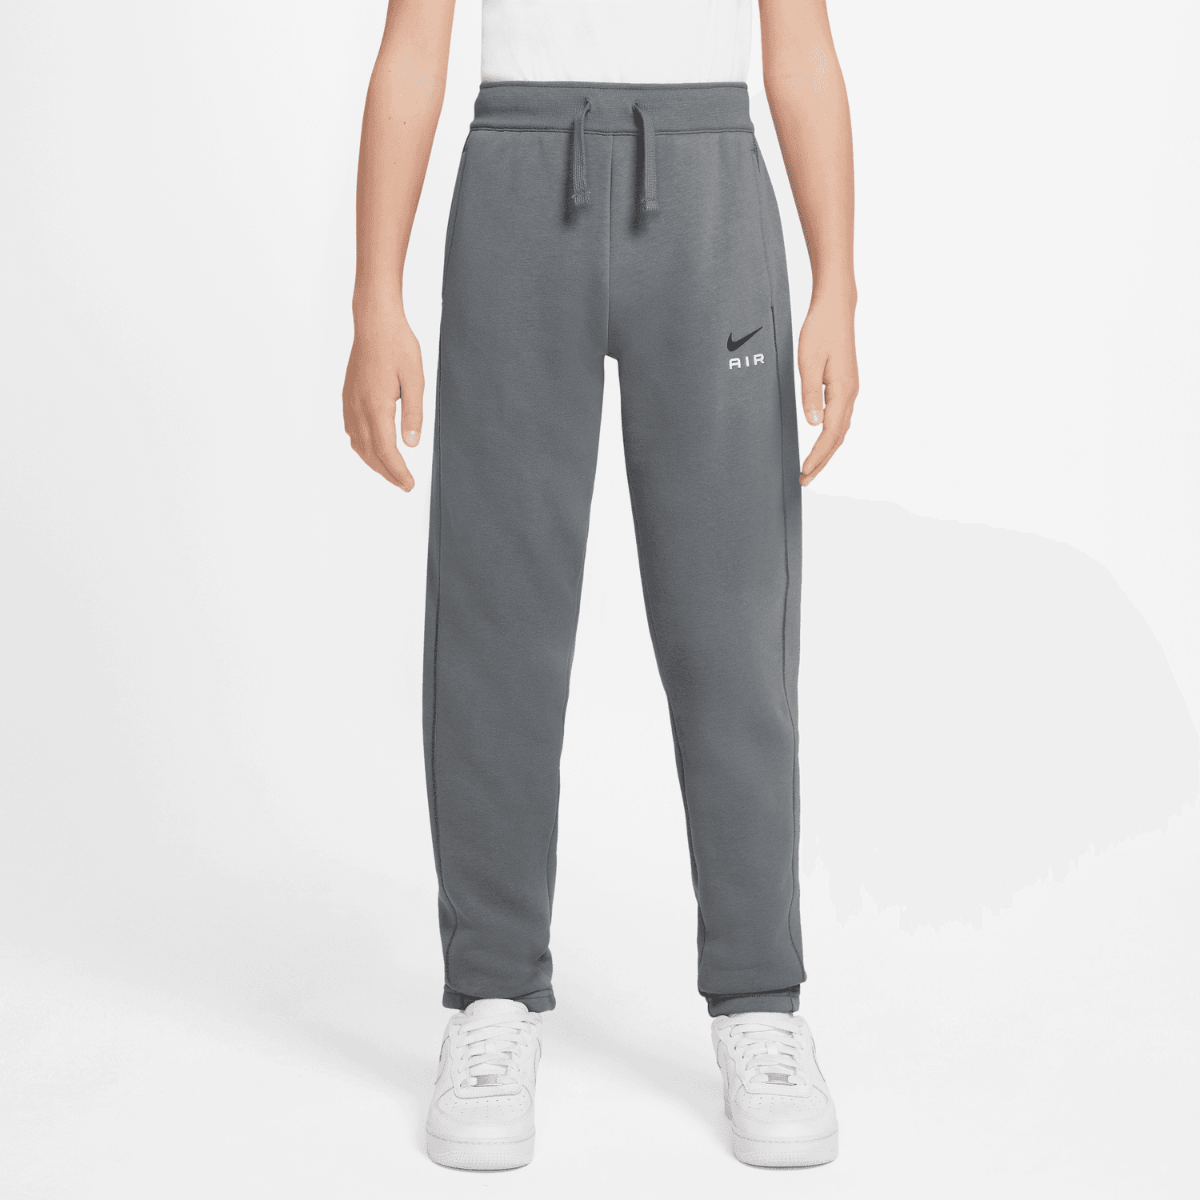 Nike Air Hose Junior – Grau/Weiß